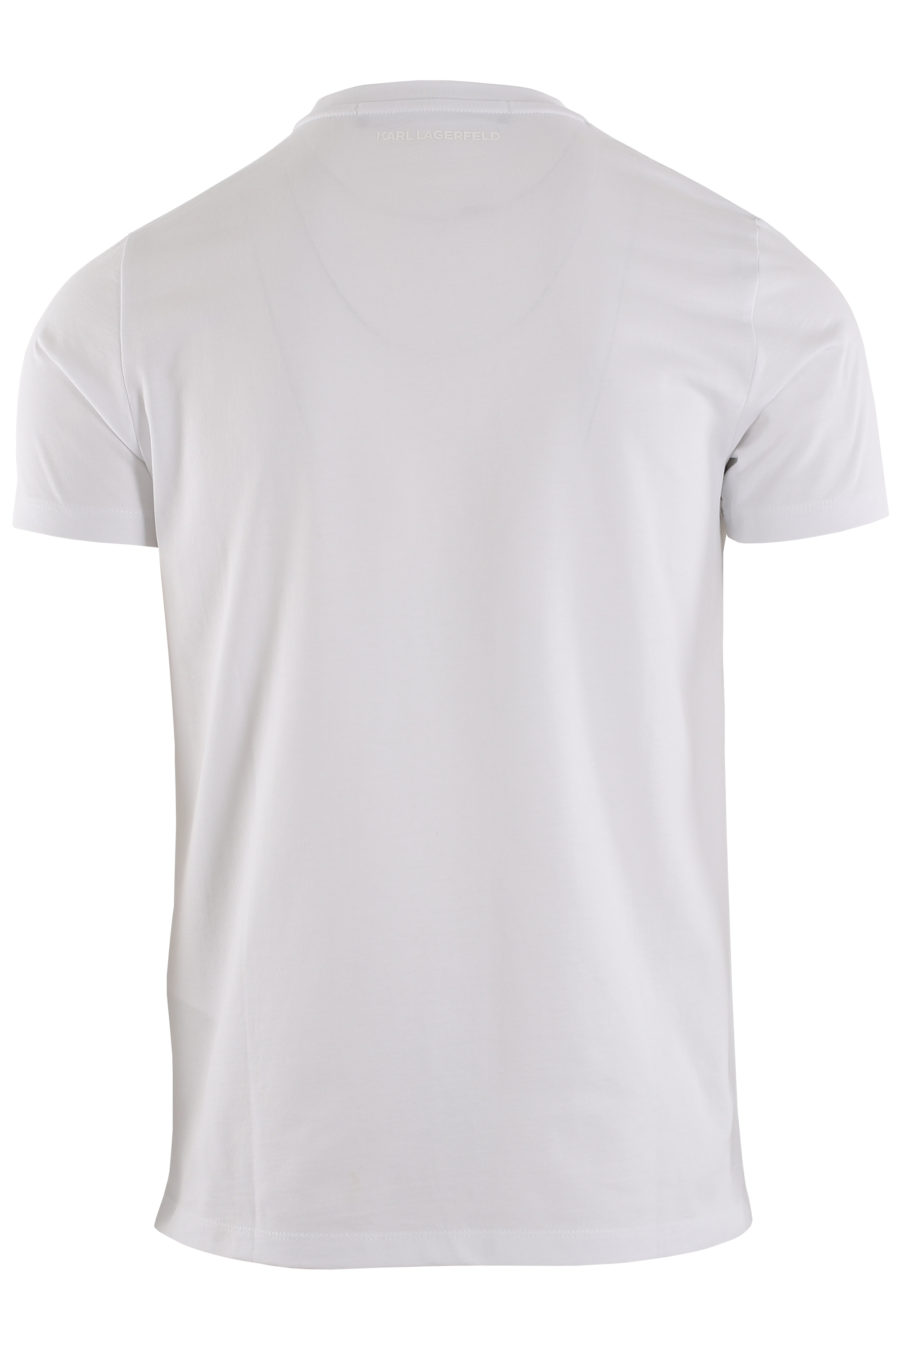 T-shirt blanc avec logo multicolore bleu - IMG 0429